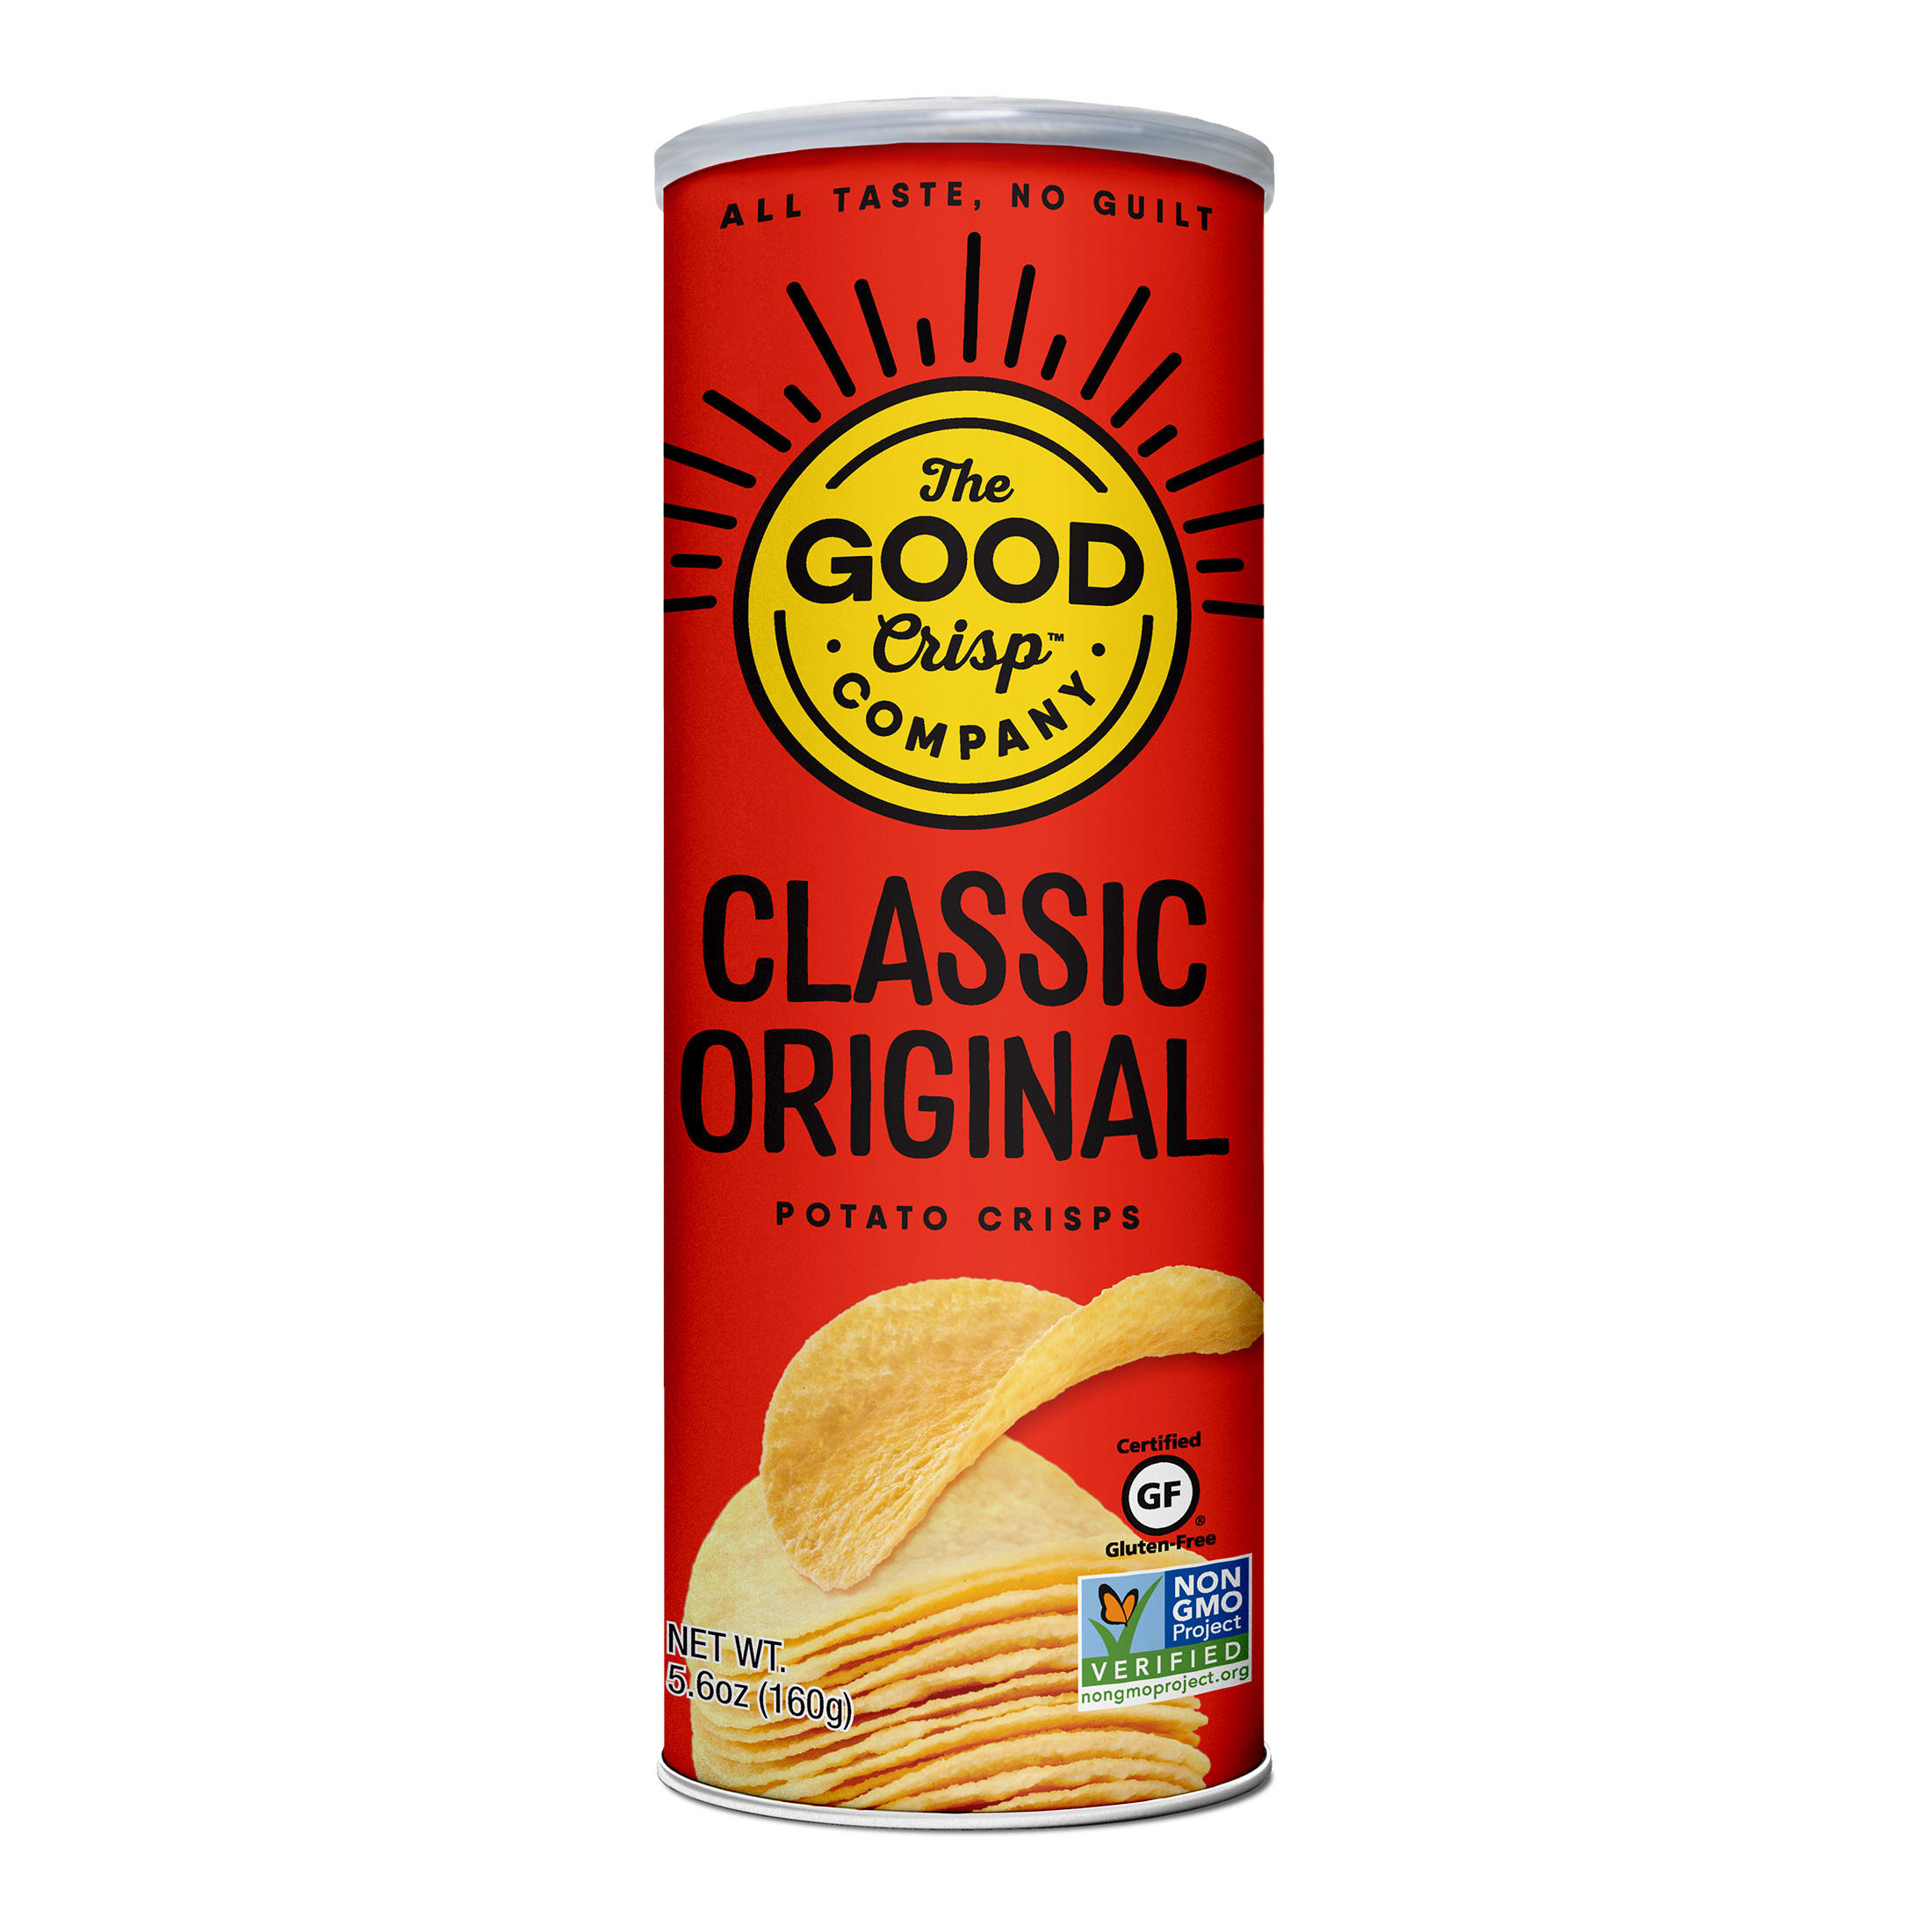 Pringles Potato Crisps Chips Salt and Vinegar